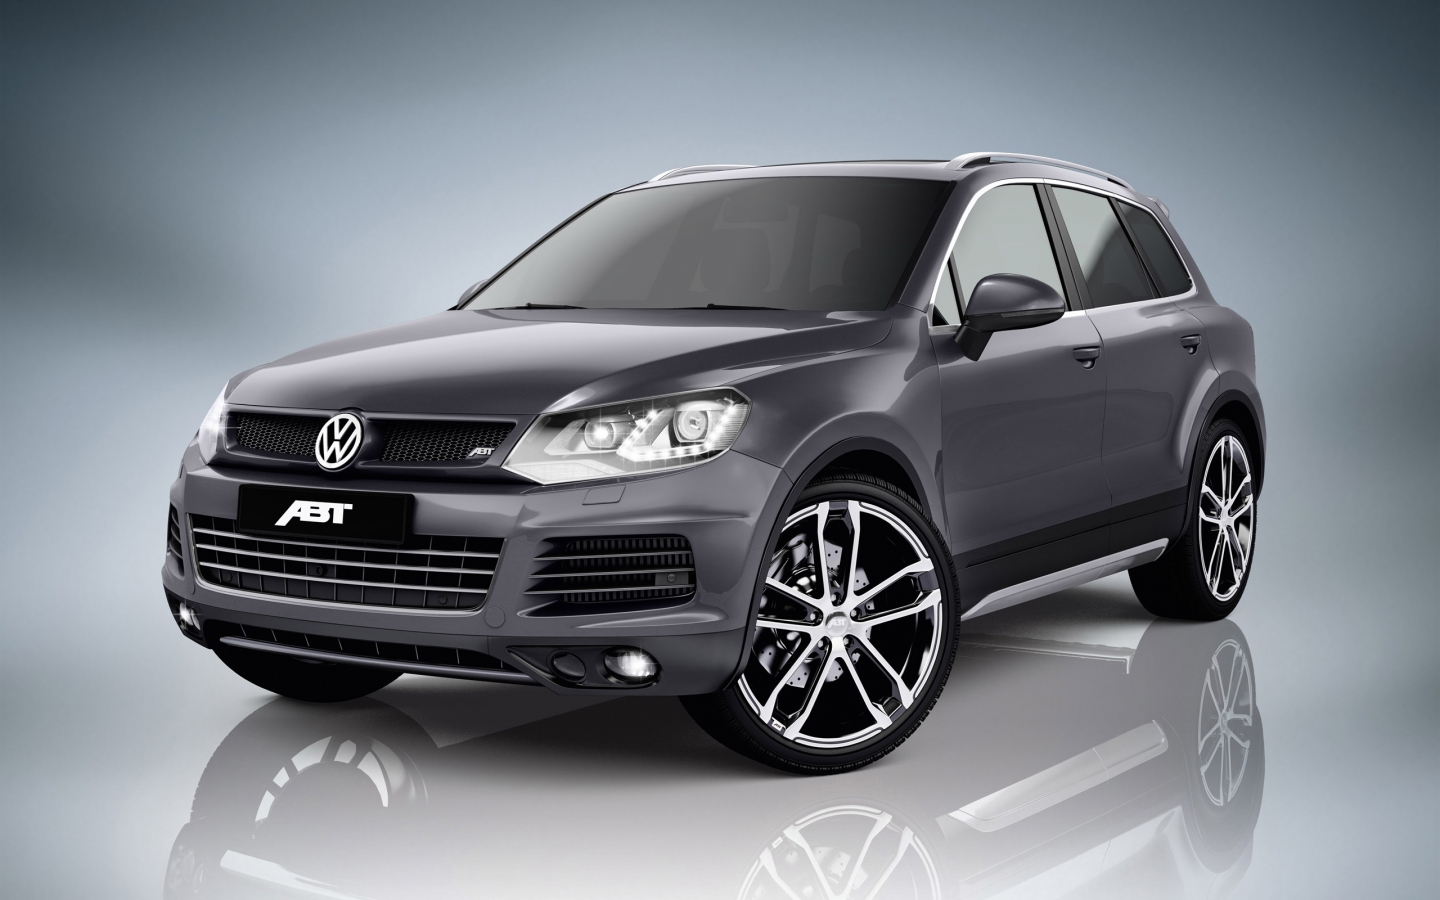 2011 ABT VW Touareg for 1440 x 900 widescreen resolution